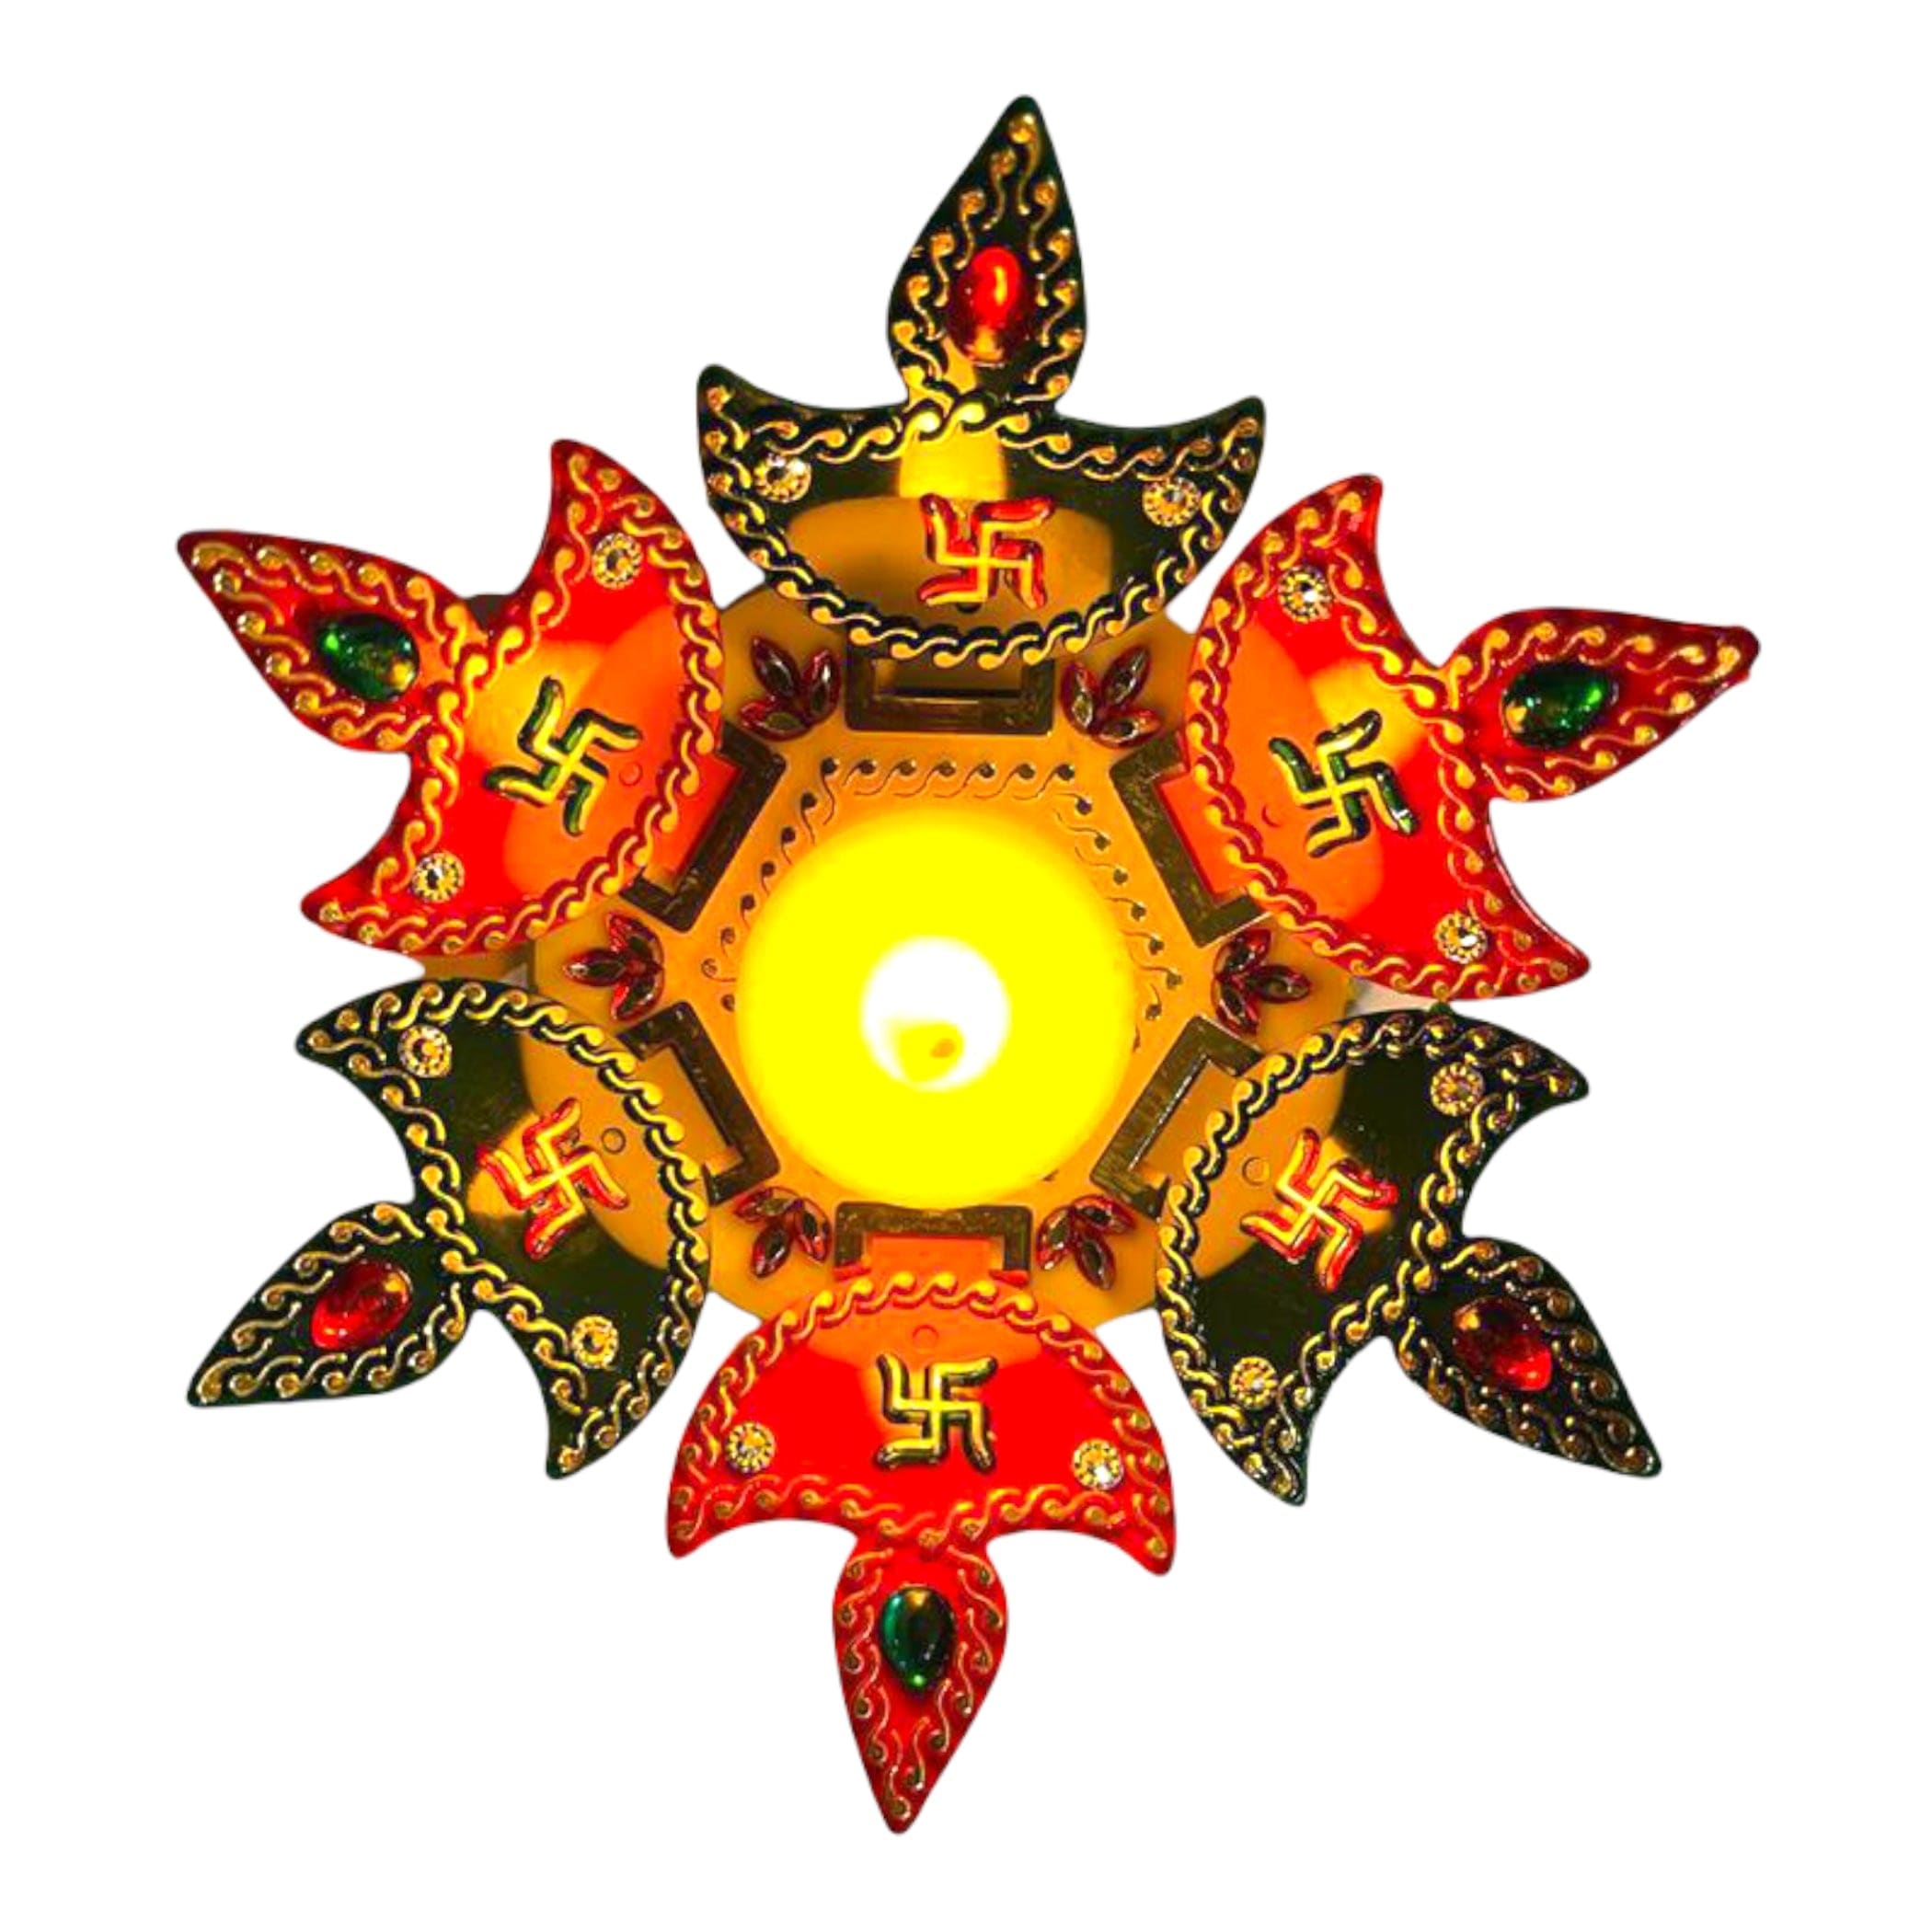 Diwali gift box rangoli sweets navratri hamper basket decor